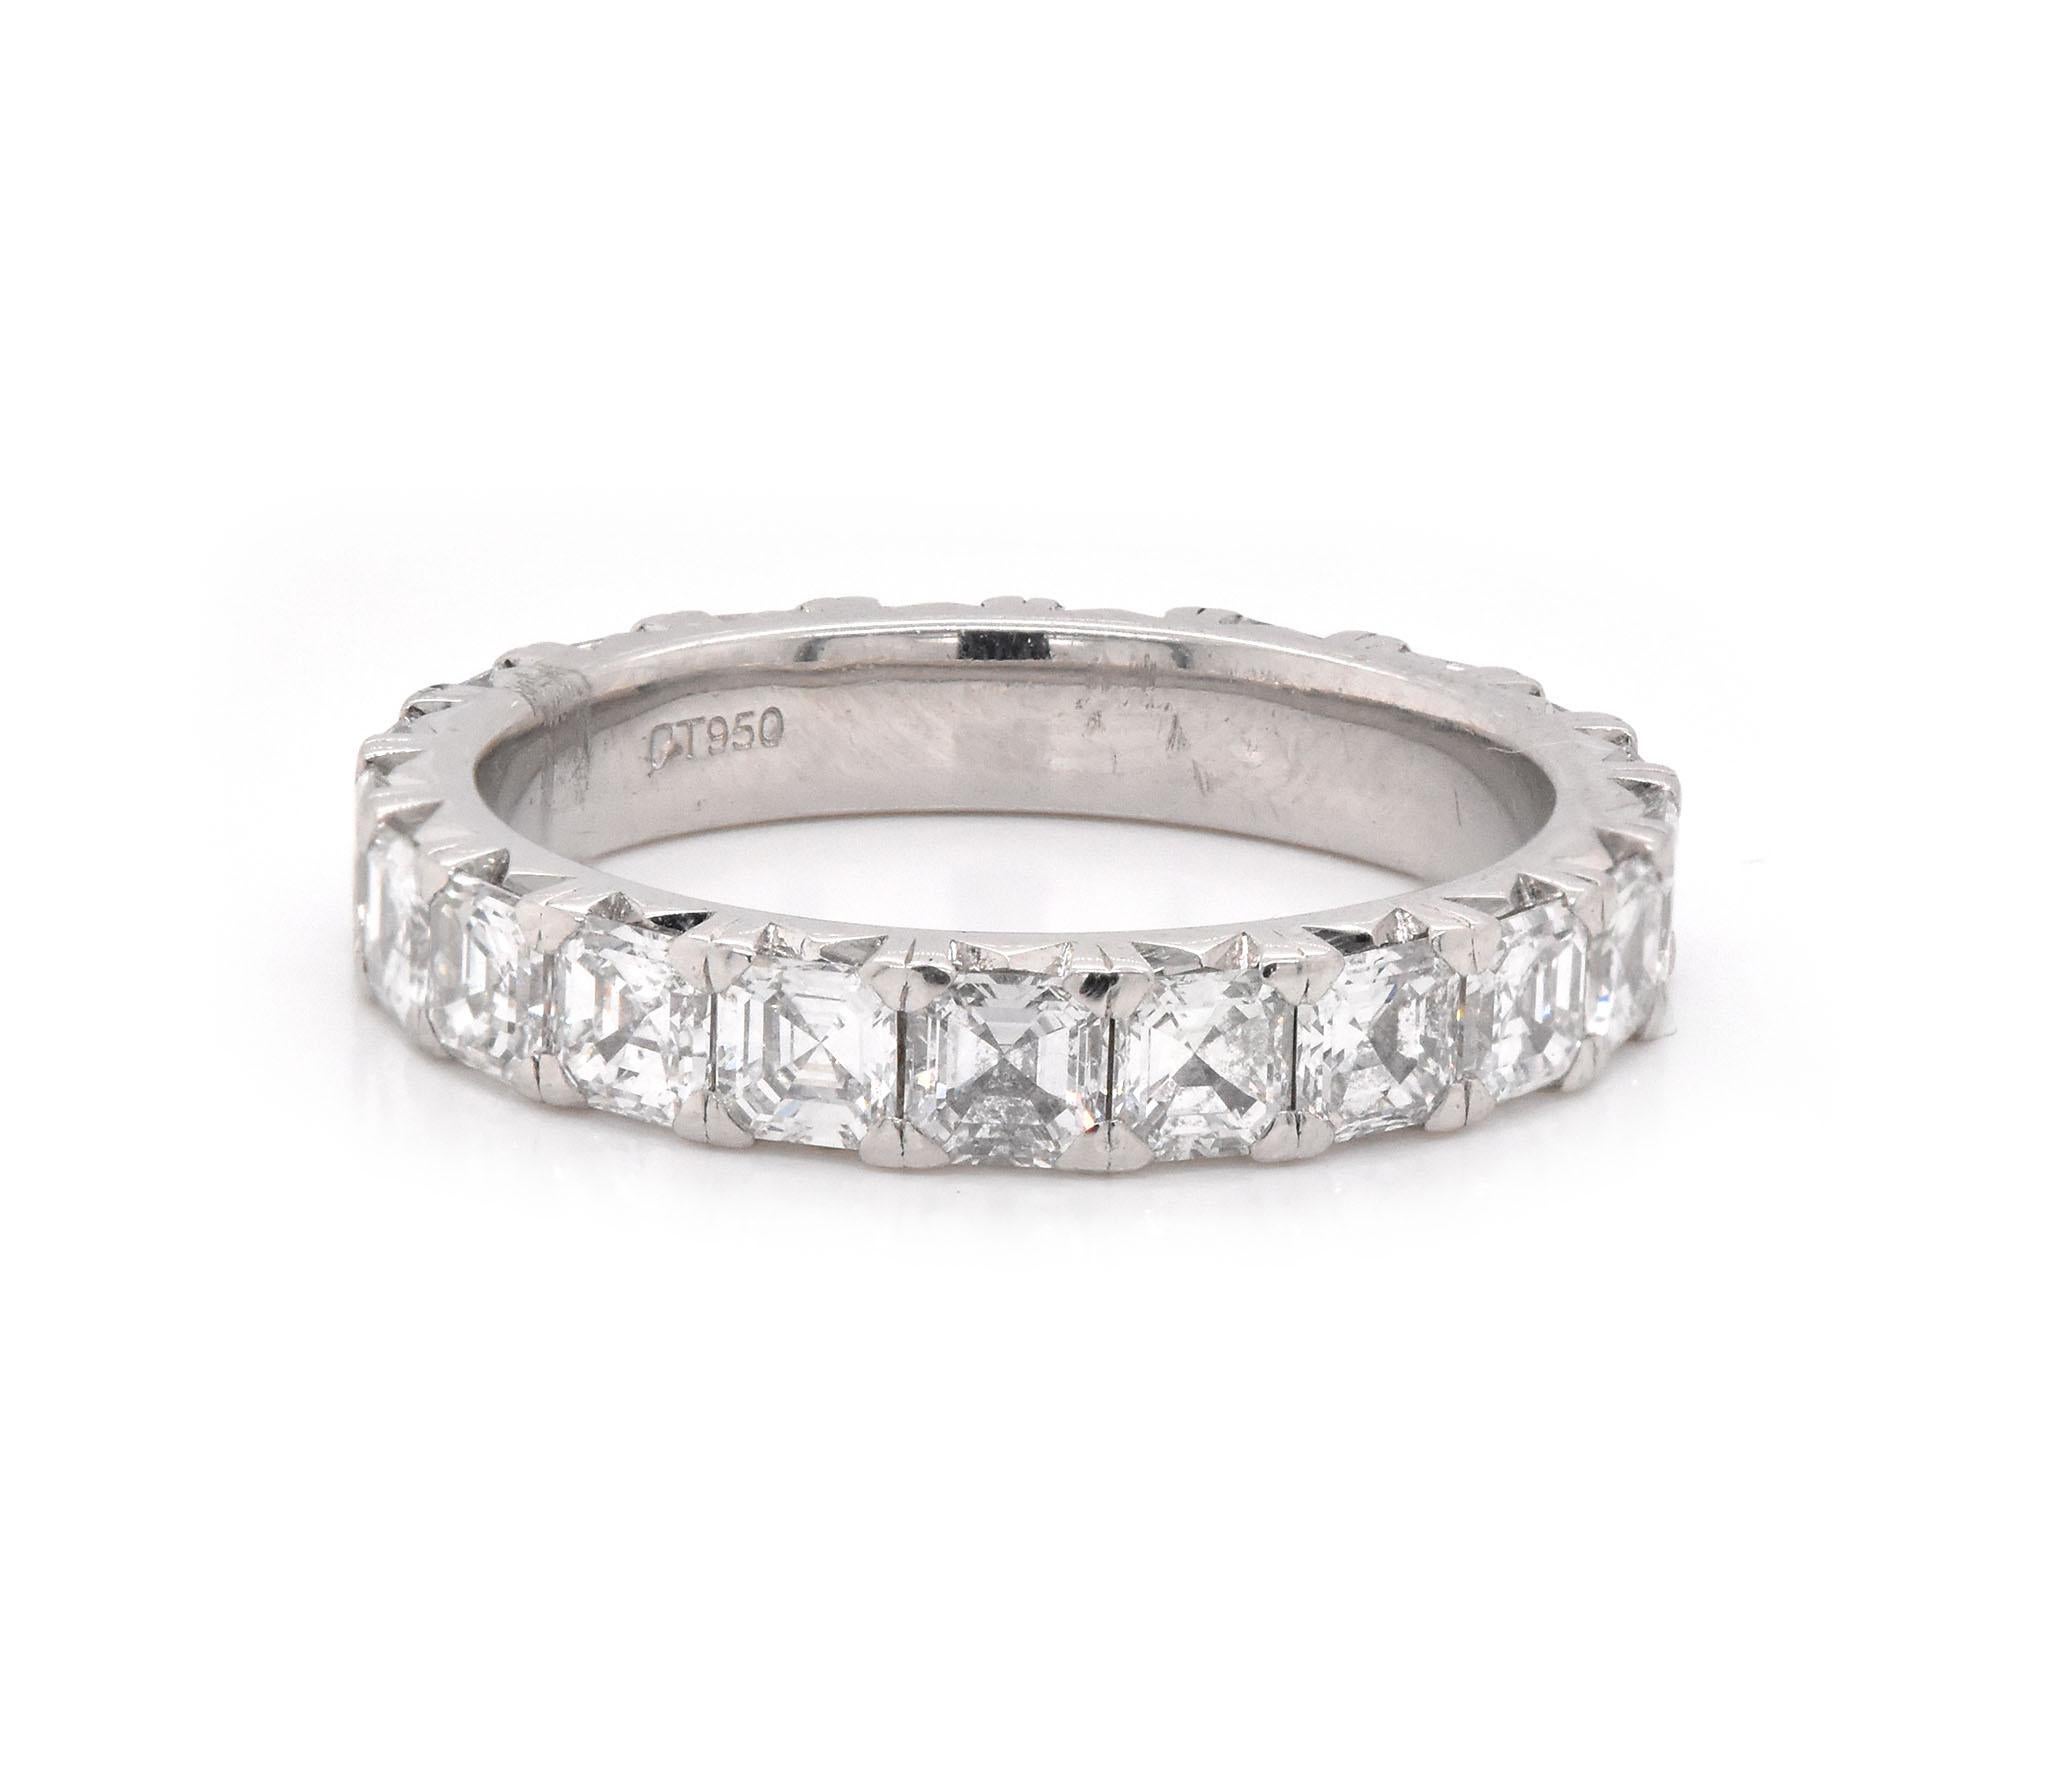 Designer: Custom
Material: platinum 
Diamonds: 21 asscher cut = 3.00cttw 
Color: G
Clarity: VS1-2
Size: 7
Dimensions: ring measures 3.5mm in width
Weight: 5.13 grams